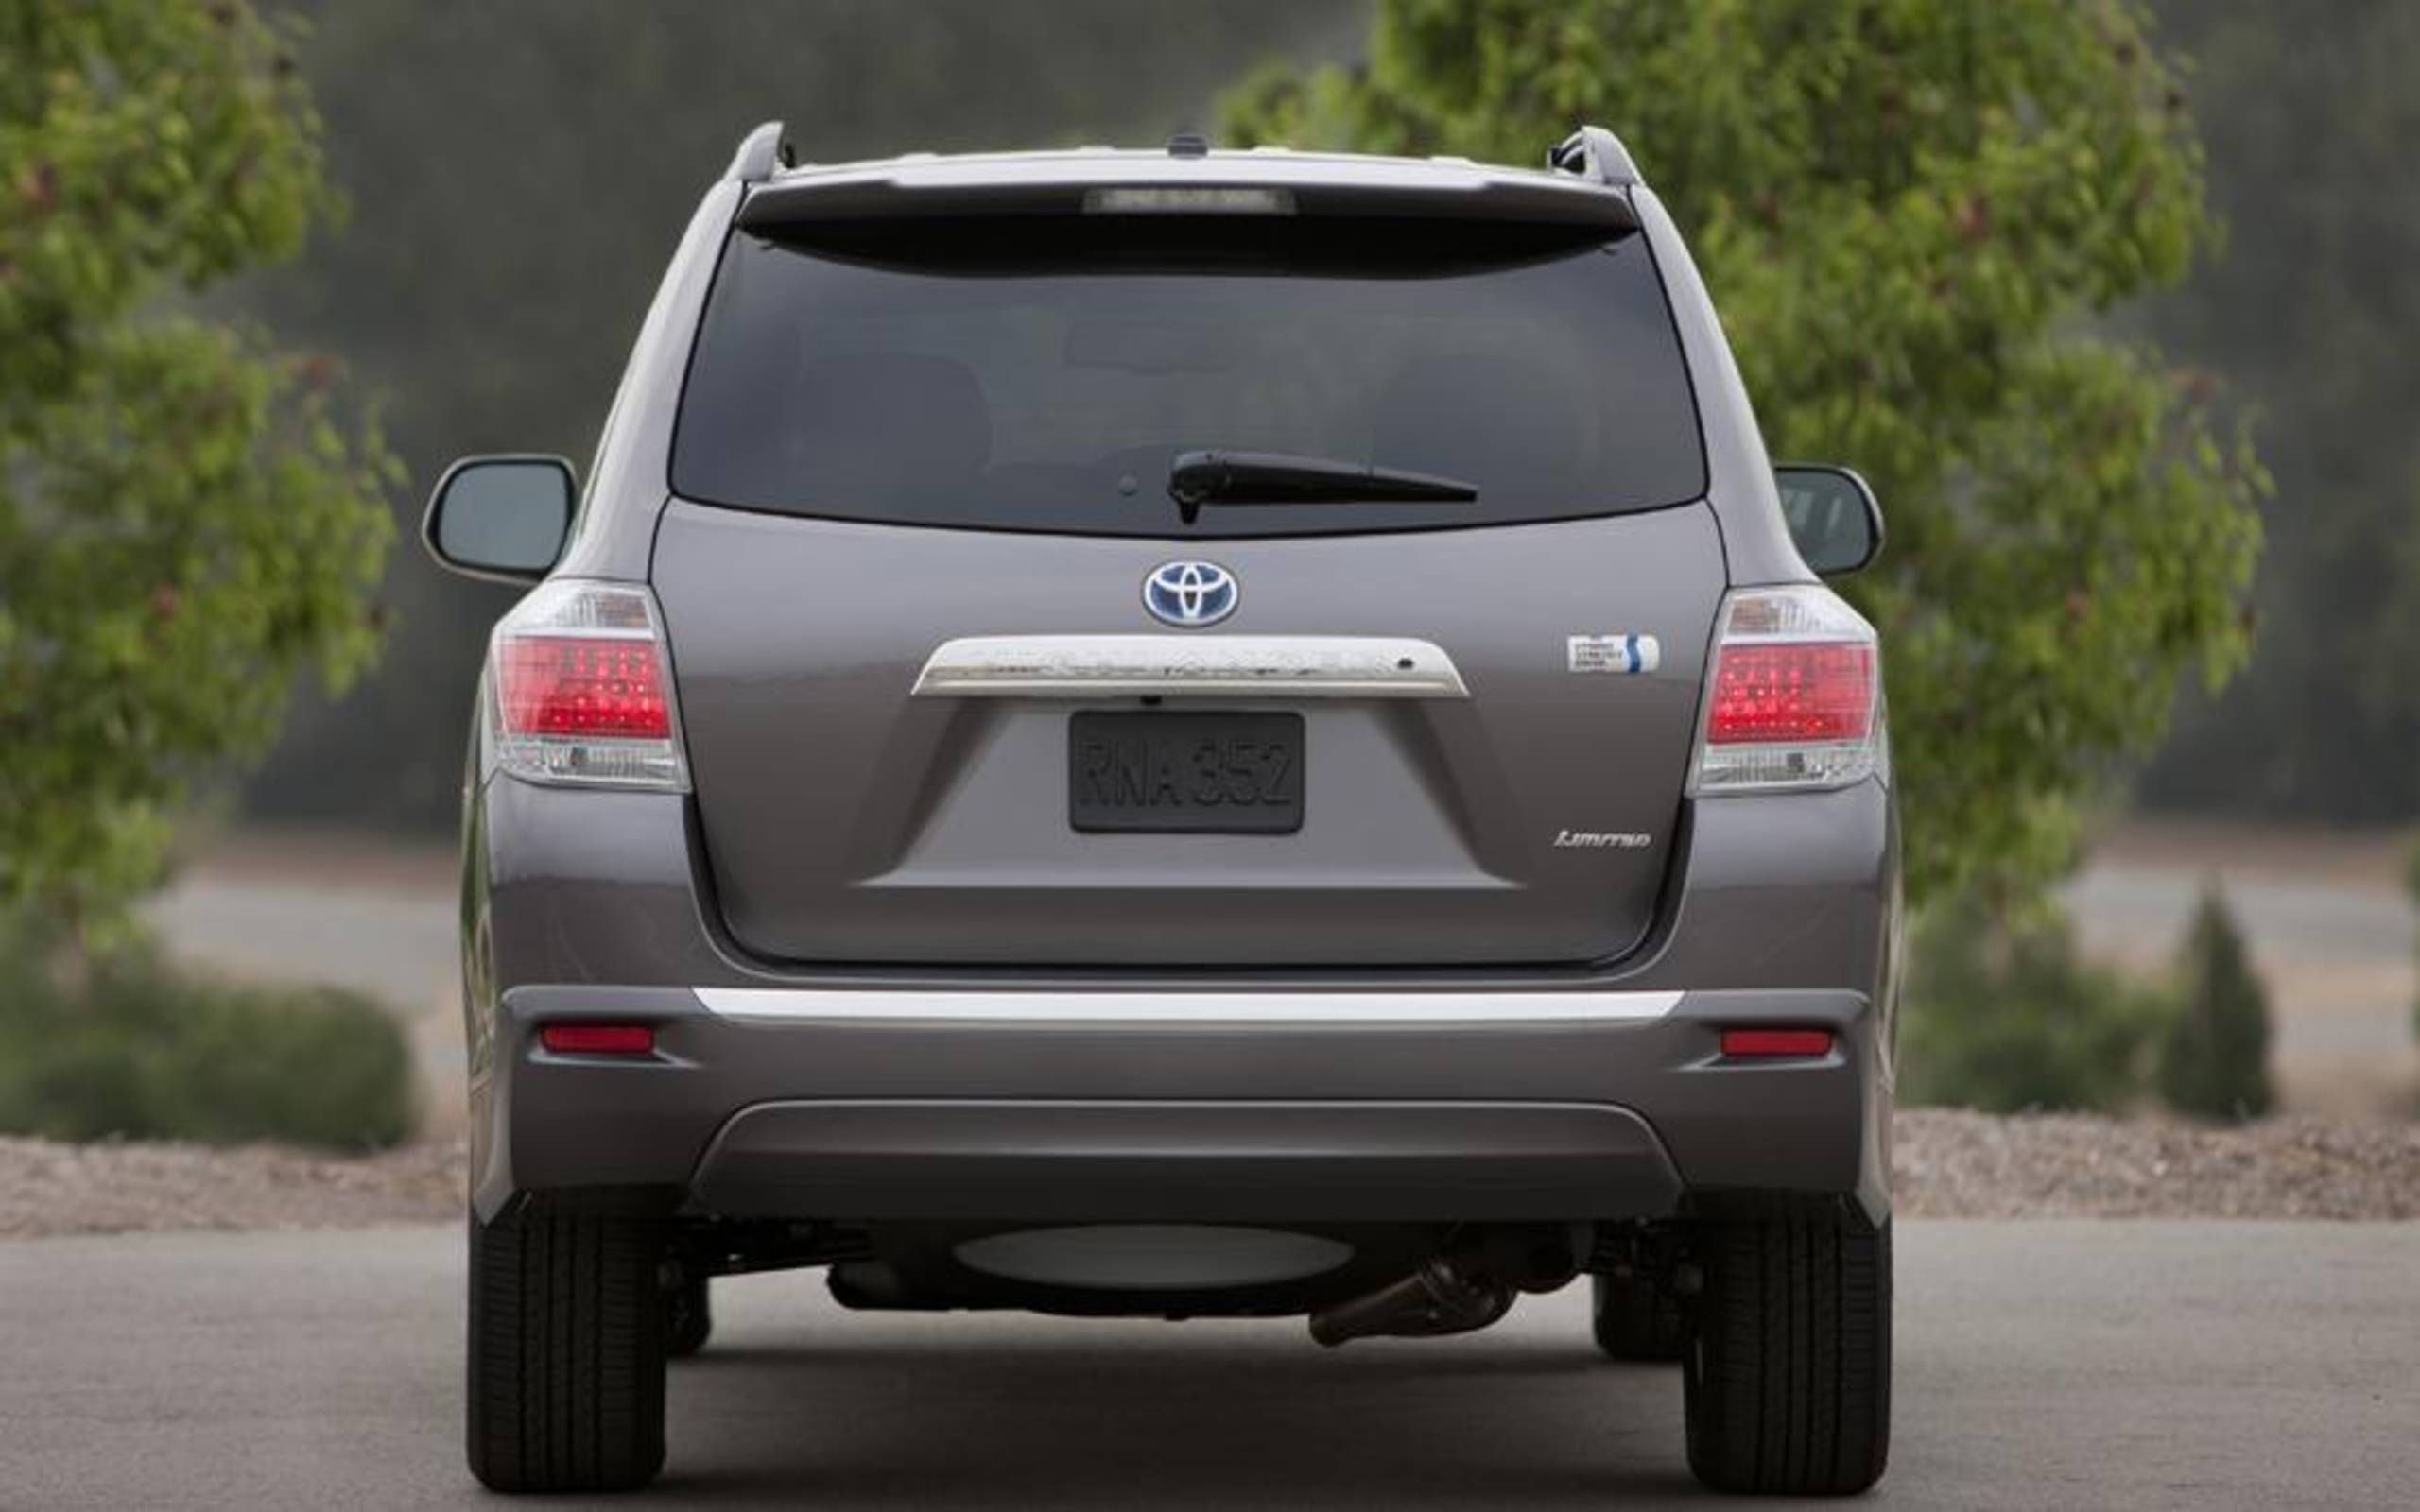 2013 Toyota Highlander Hybrid Limited review notes